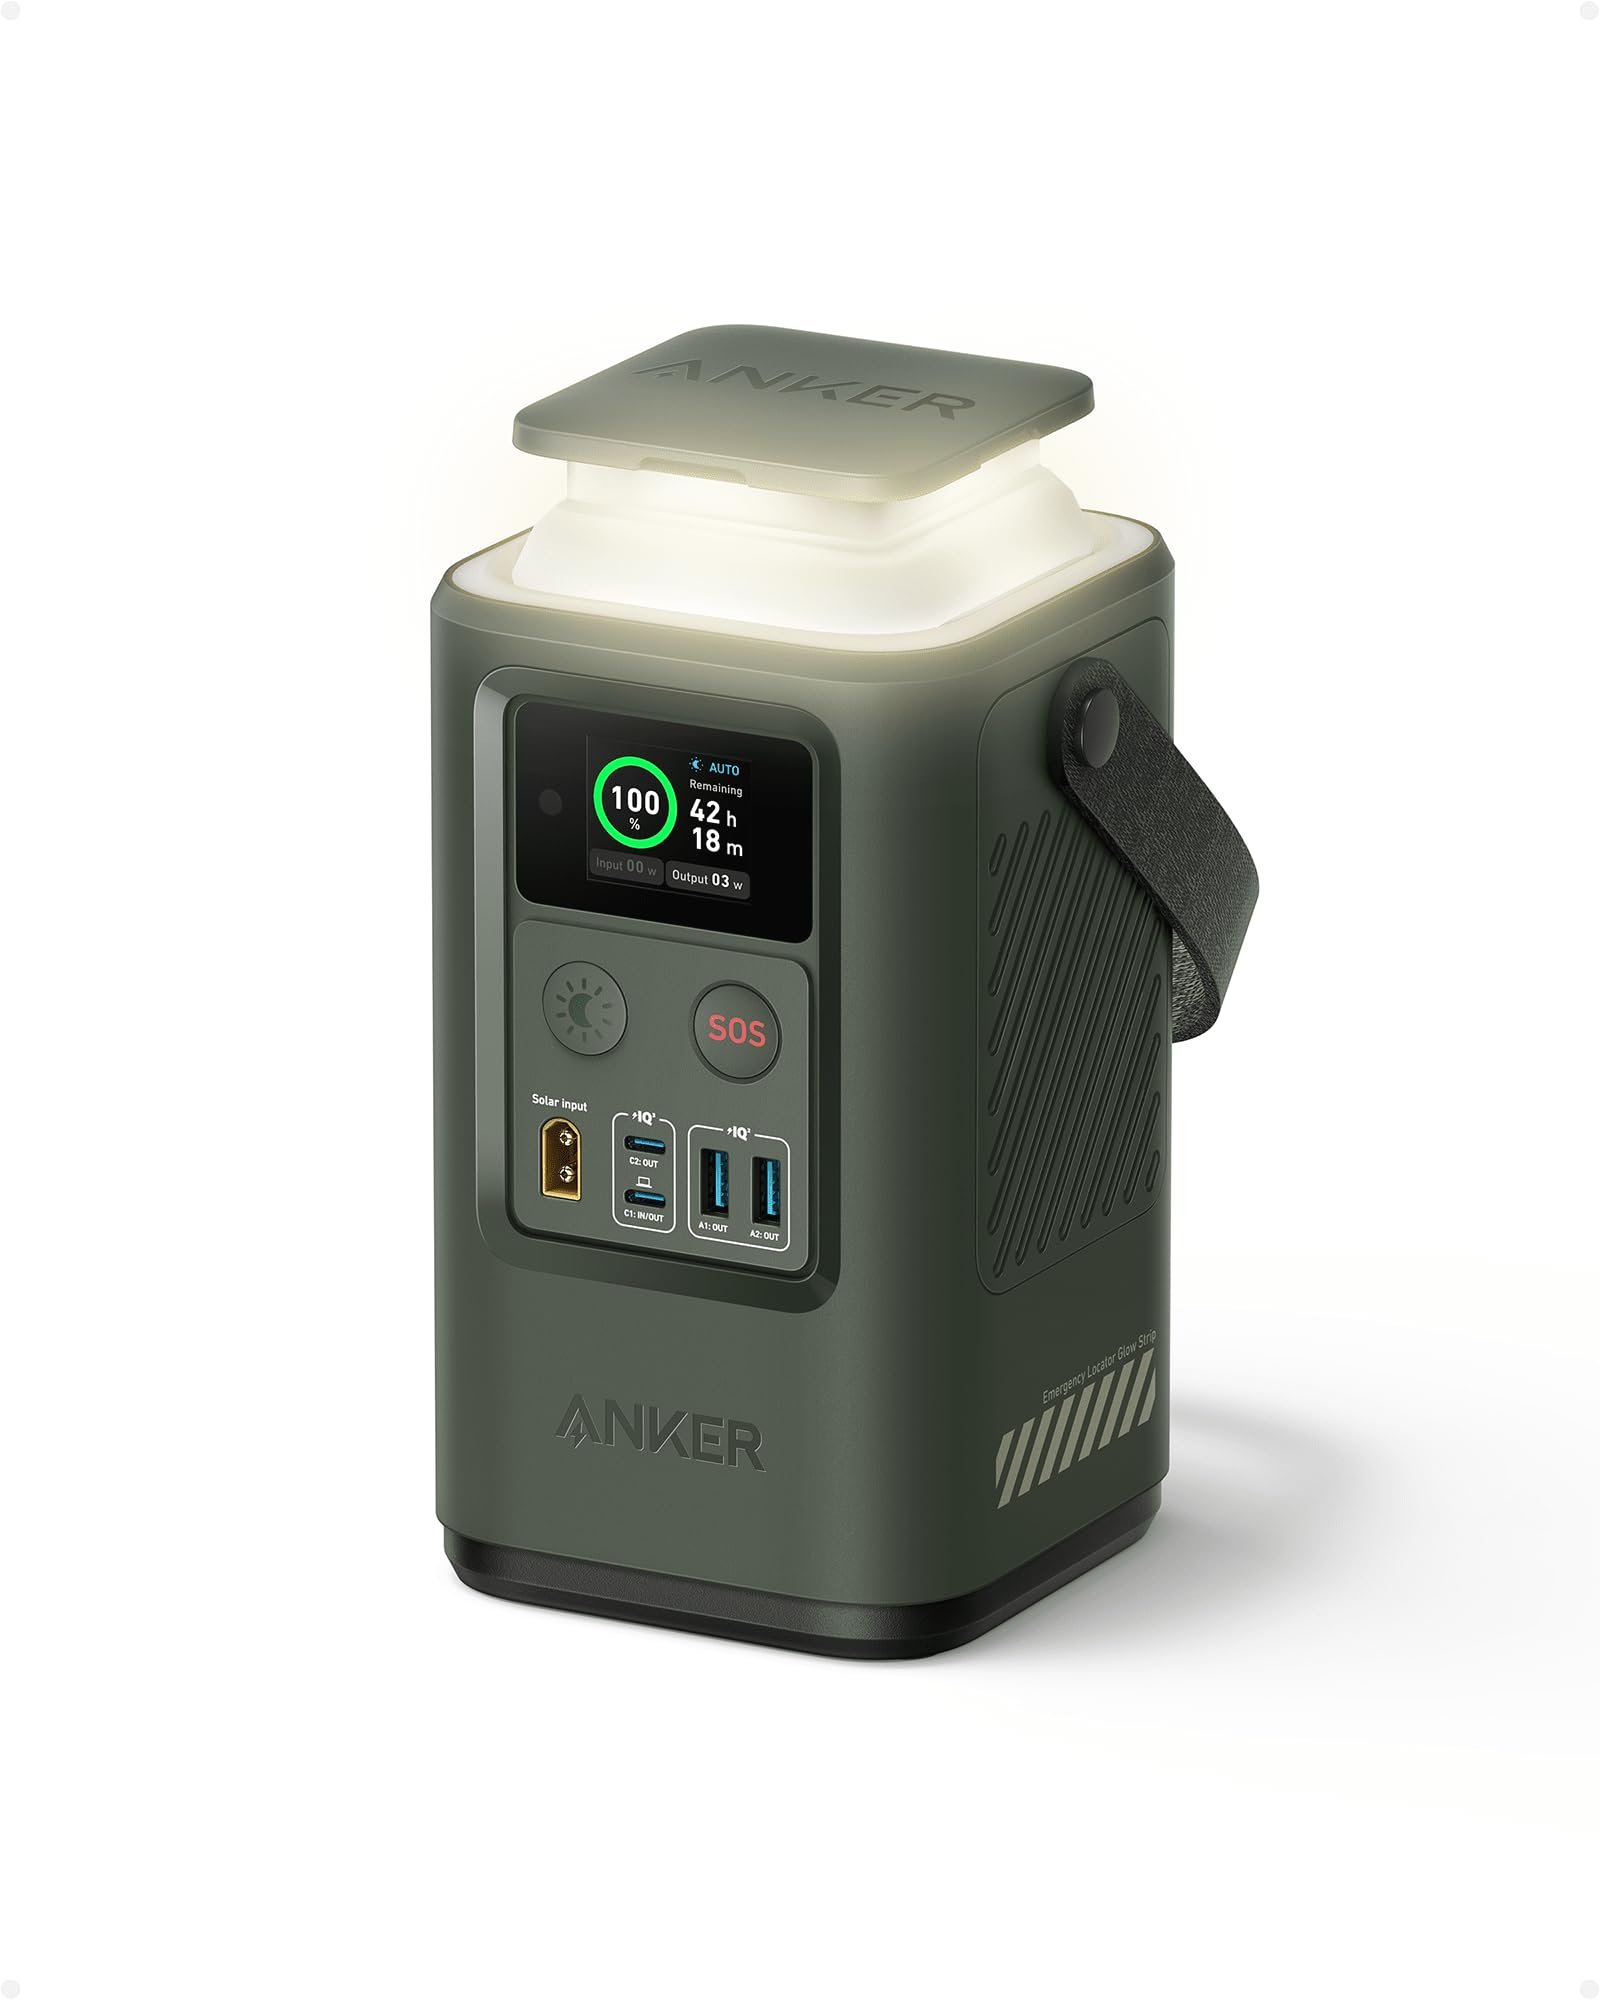 Anker 548 Power Bank LiFePO4 Portable Charger Power Station (60,000mAh) $95 + Free Shipping